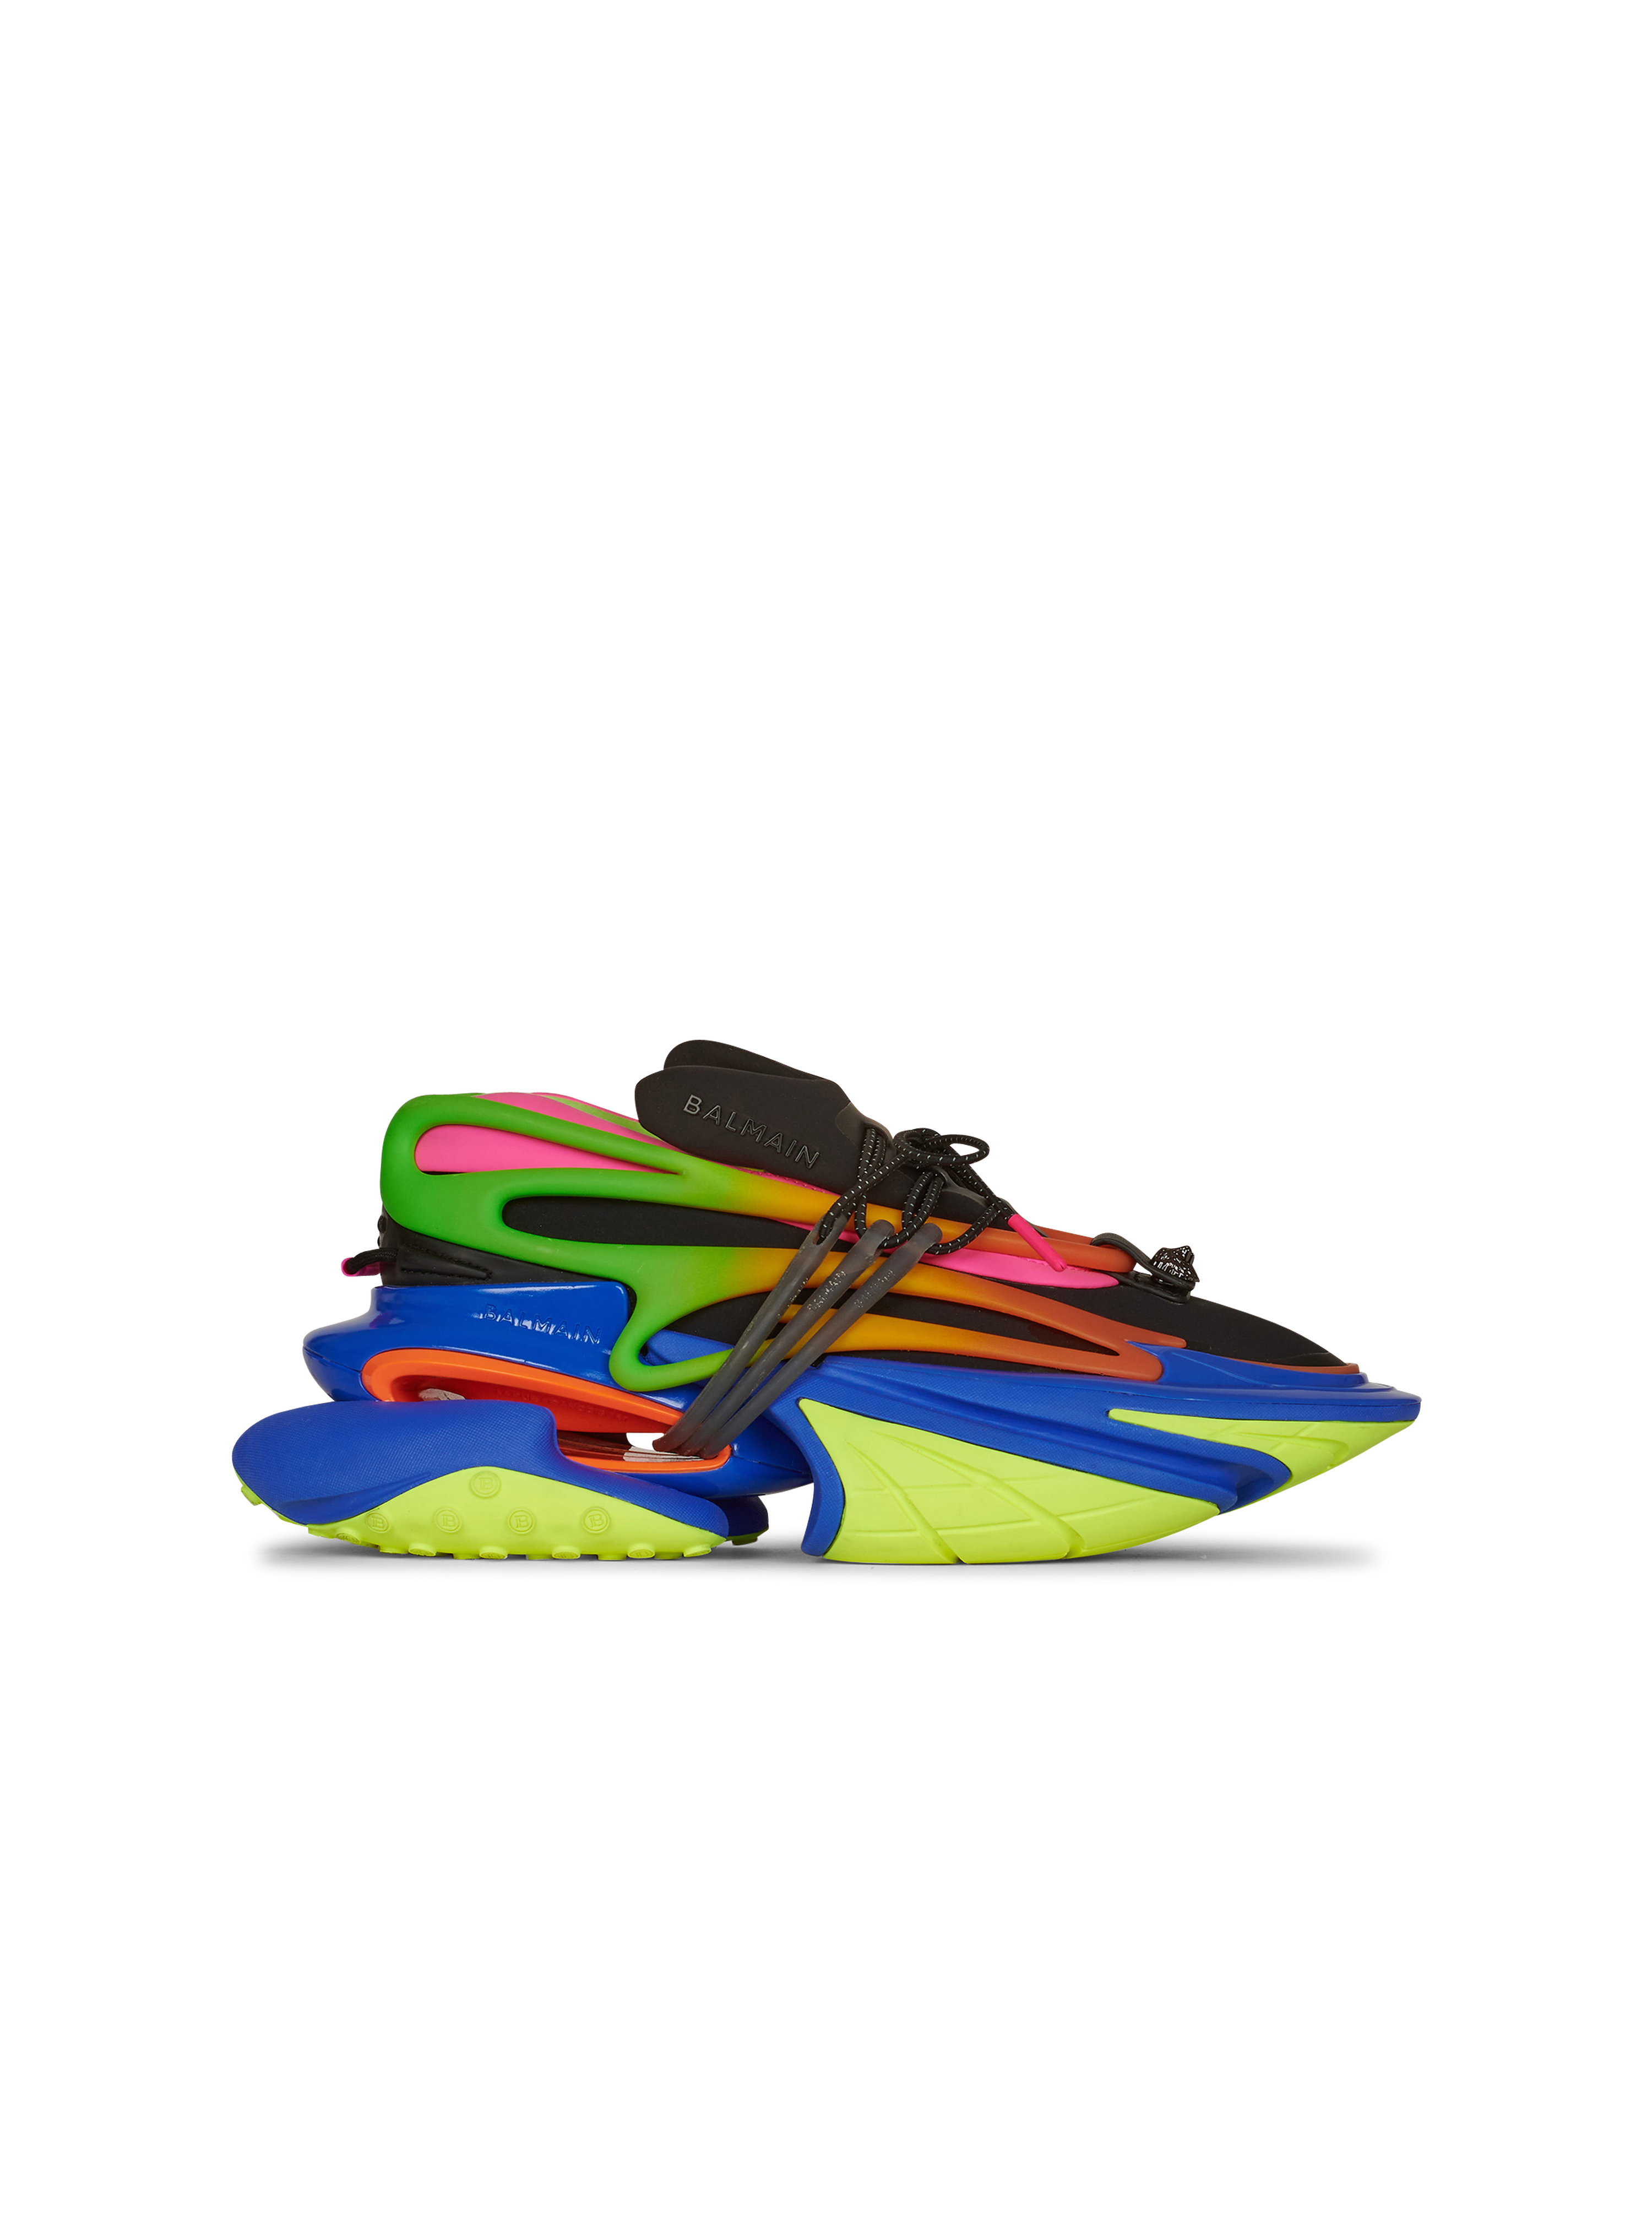 Unicorn Low-Top-Sneakers aus mehrfarbigem Neopren und Leder, multicolor